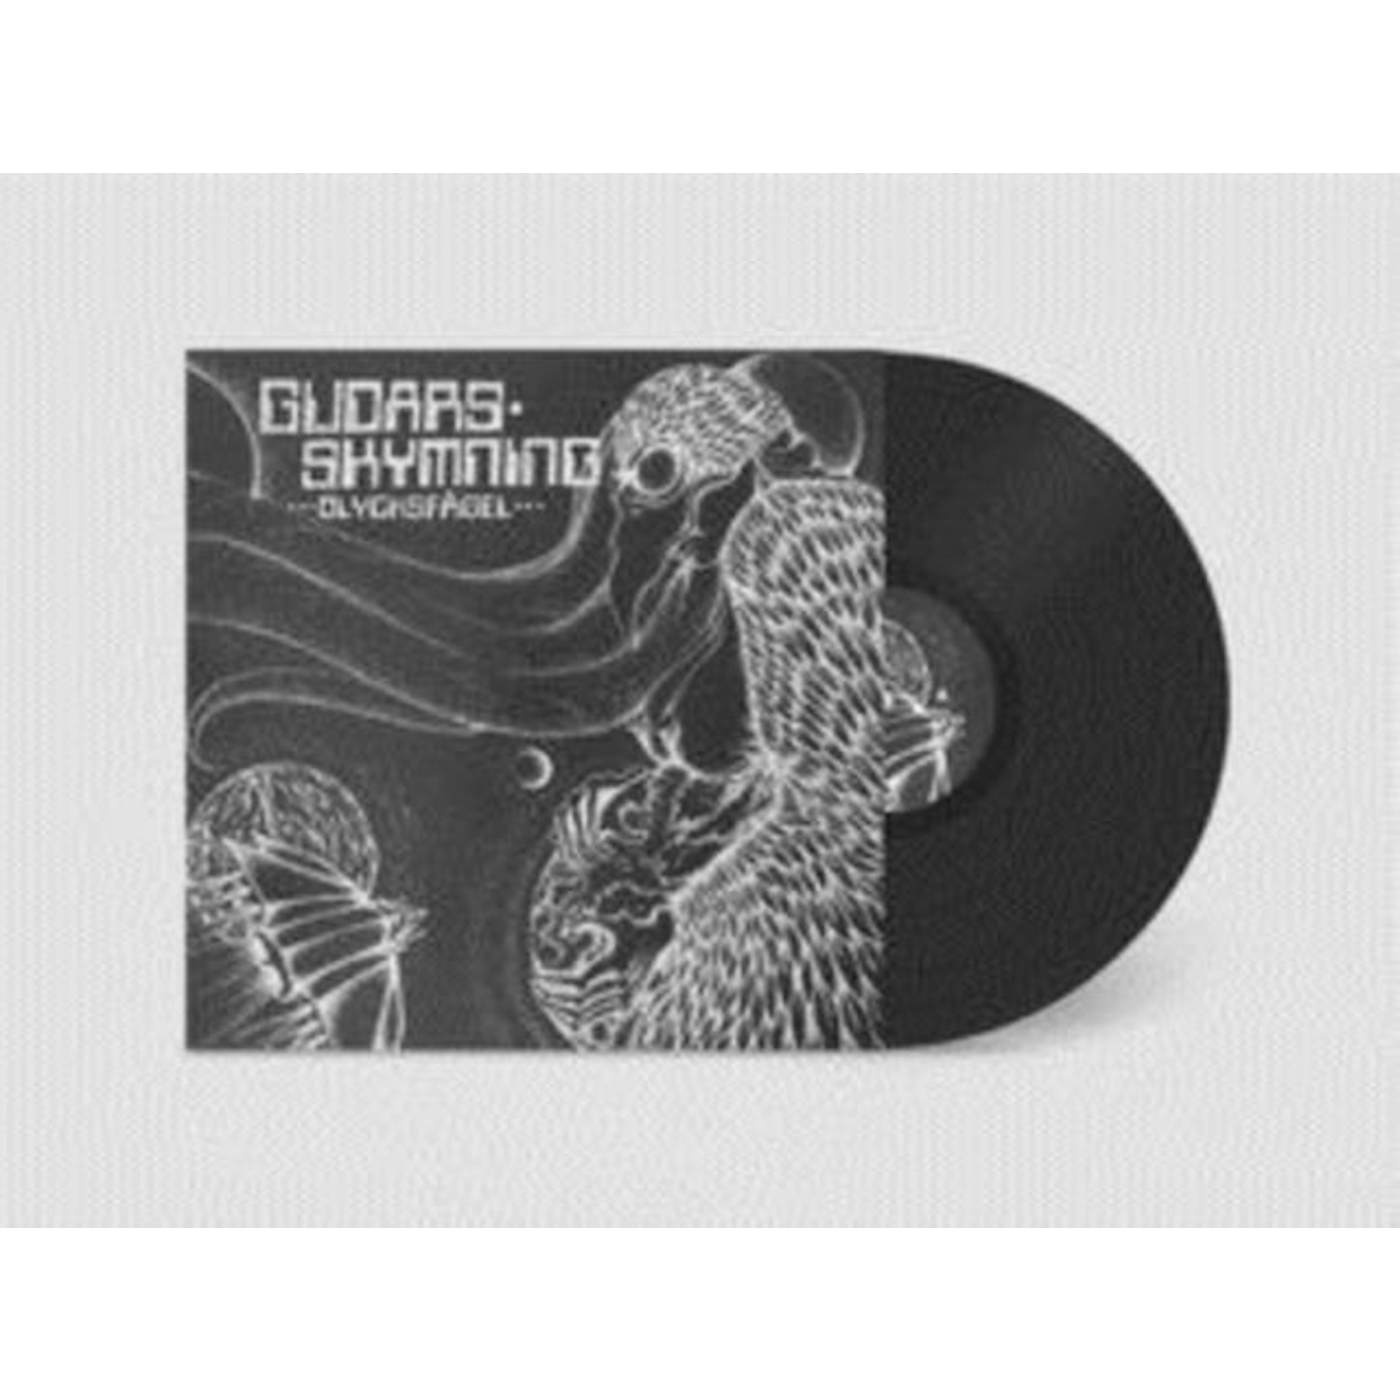 Gudars Skymning LP - Olycksfågel (Vinyl)